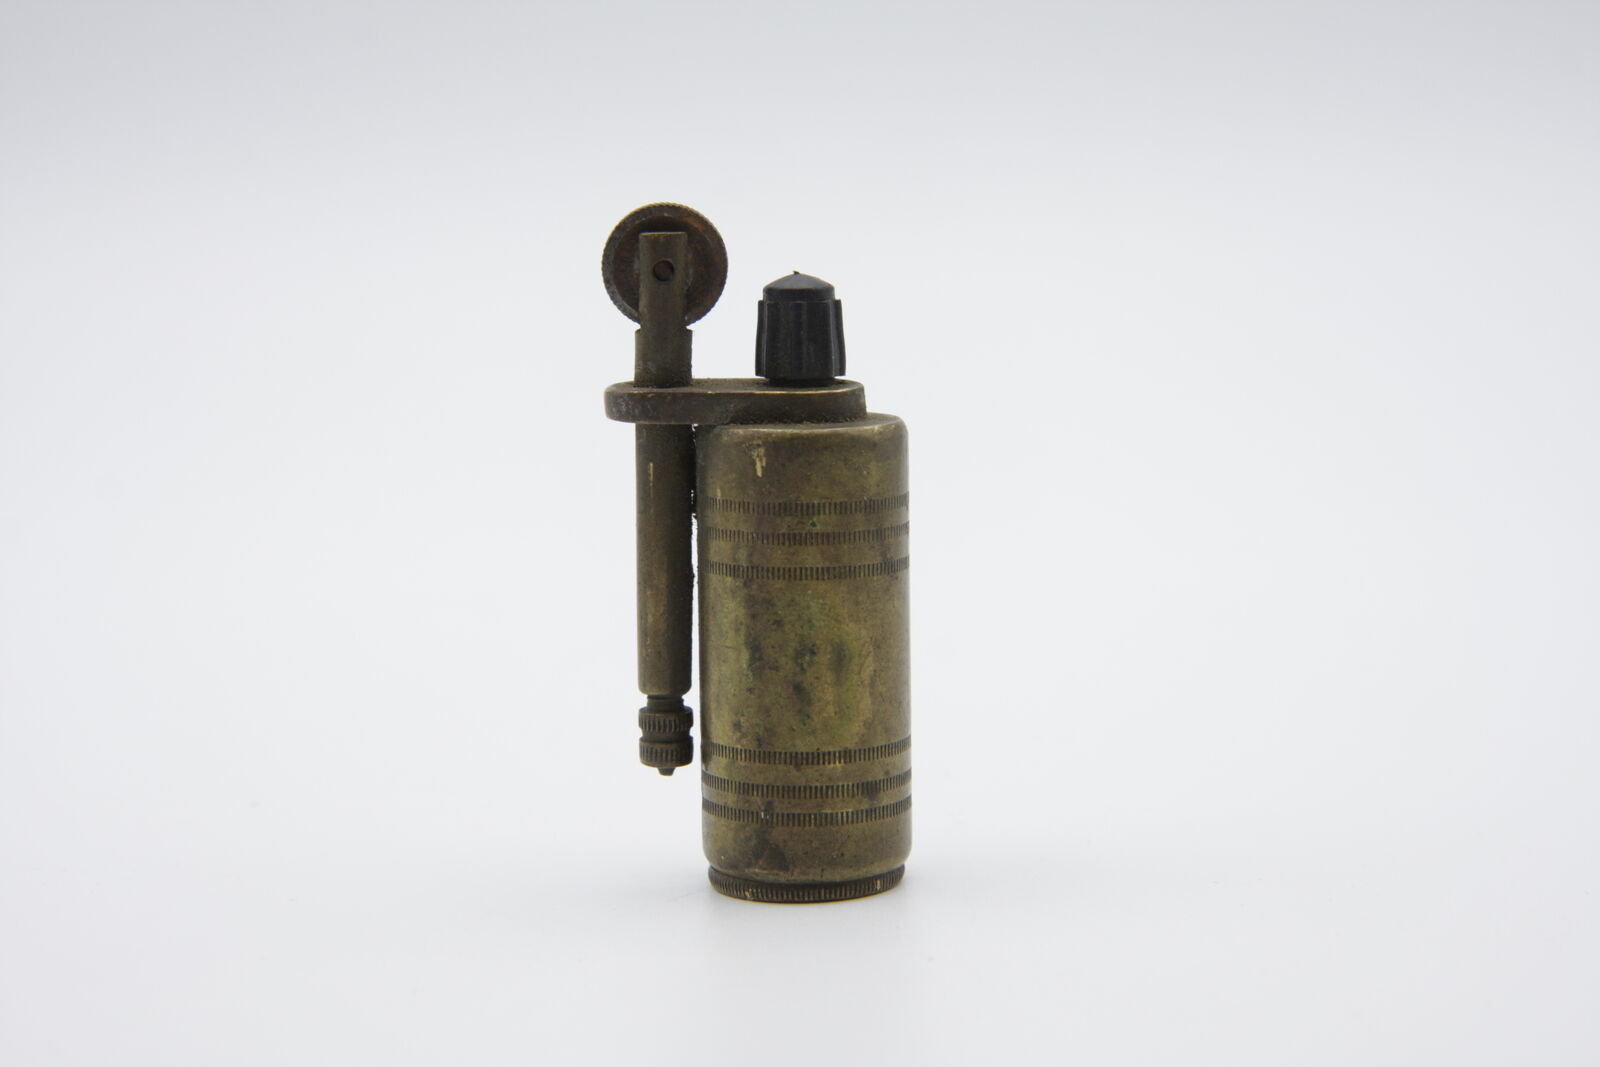 Petrol Lighter Military WW2 Vintage Metal Solders Smoking Device USSR